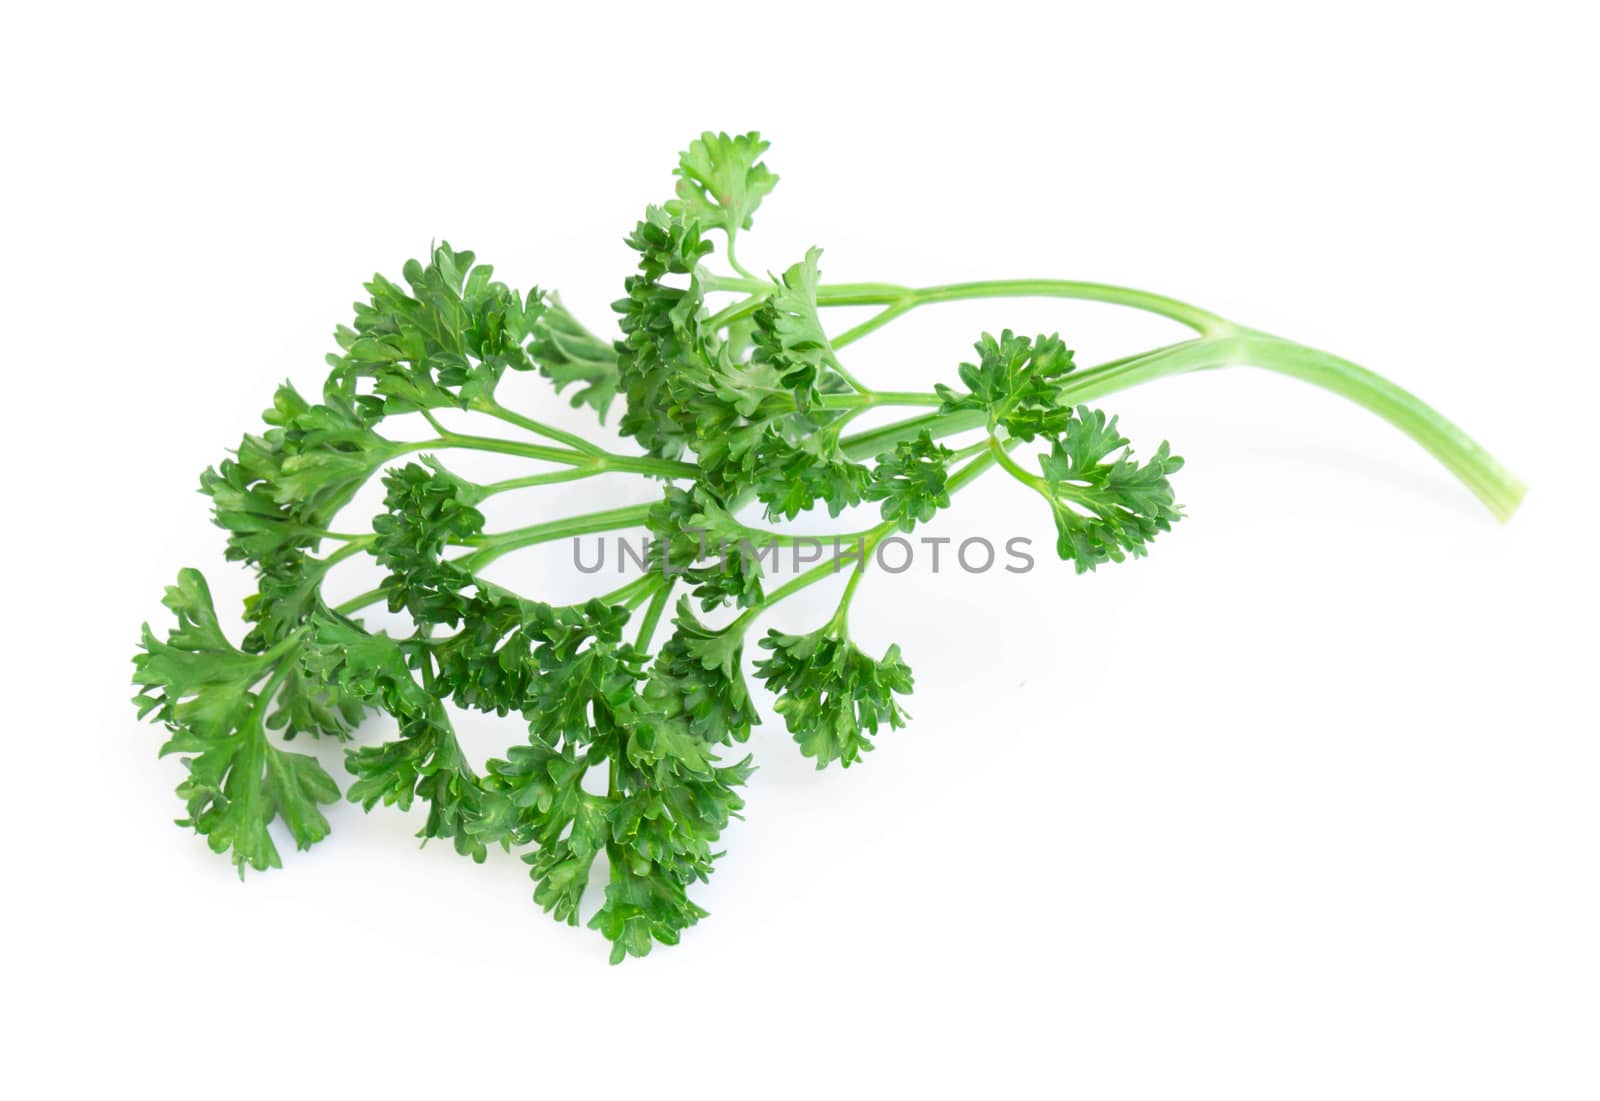 Parsley vegetable isolated on white background by pt.pongsak@gmail.com